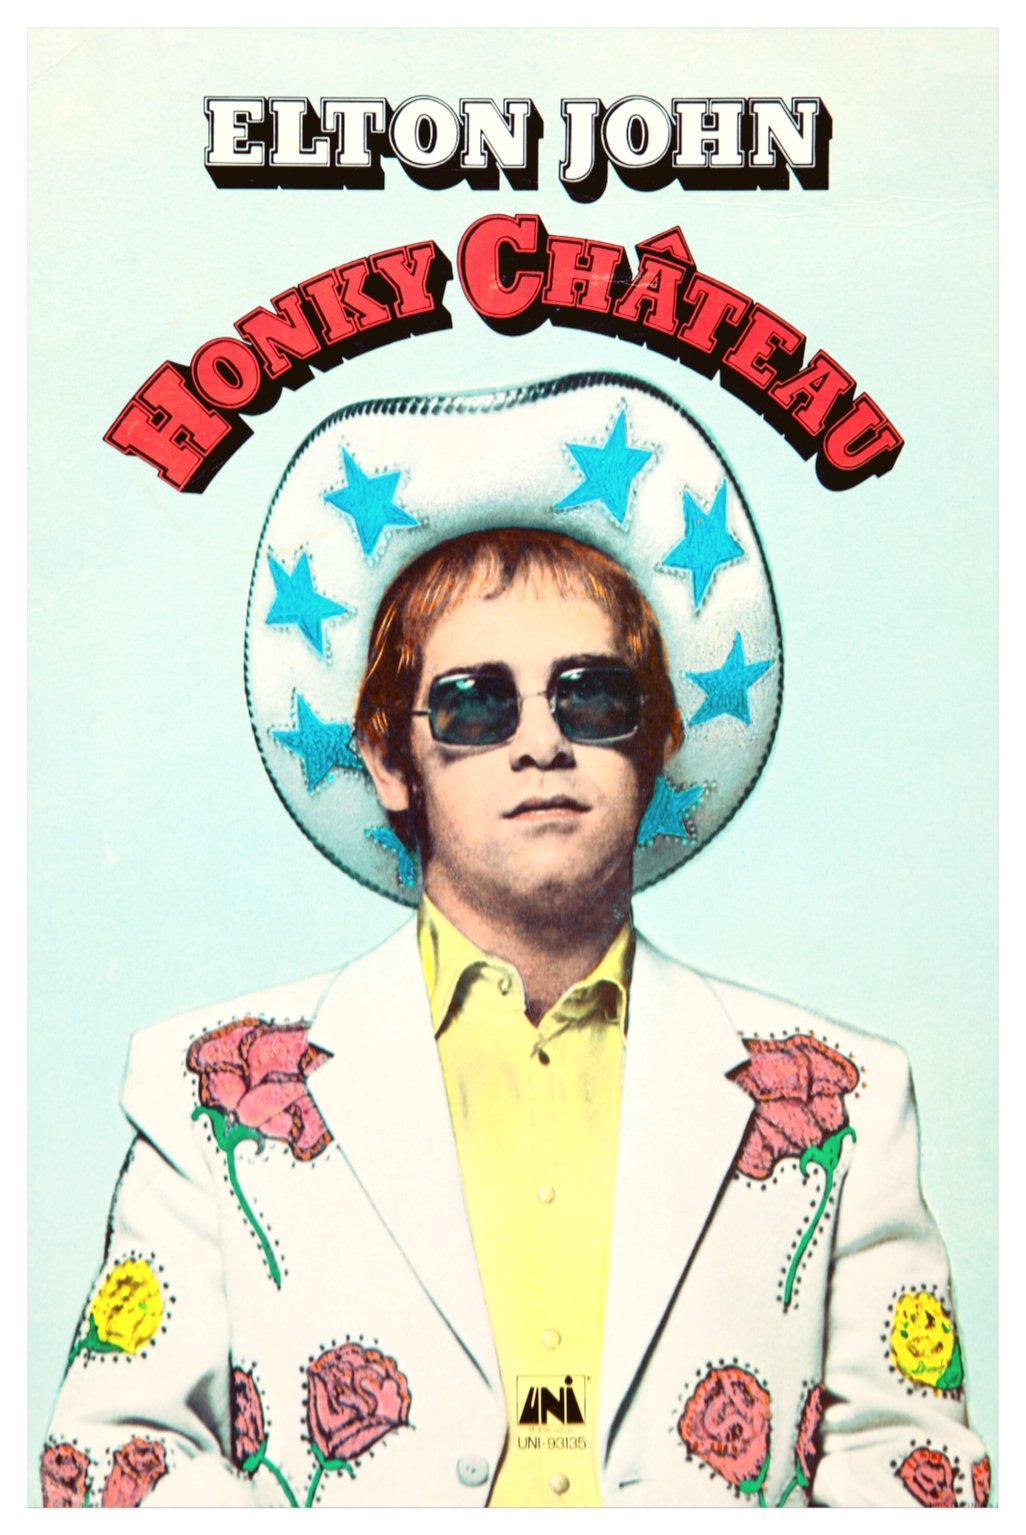 Happy Birthday Elton John, 76 years young today. 